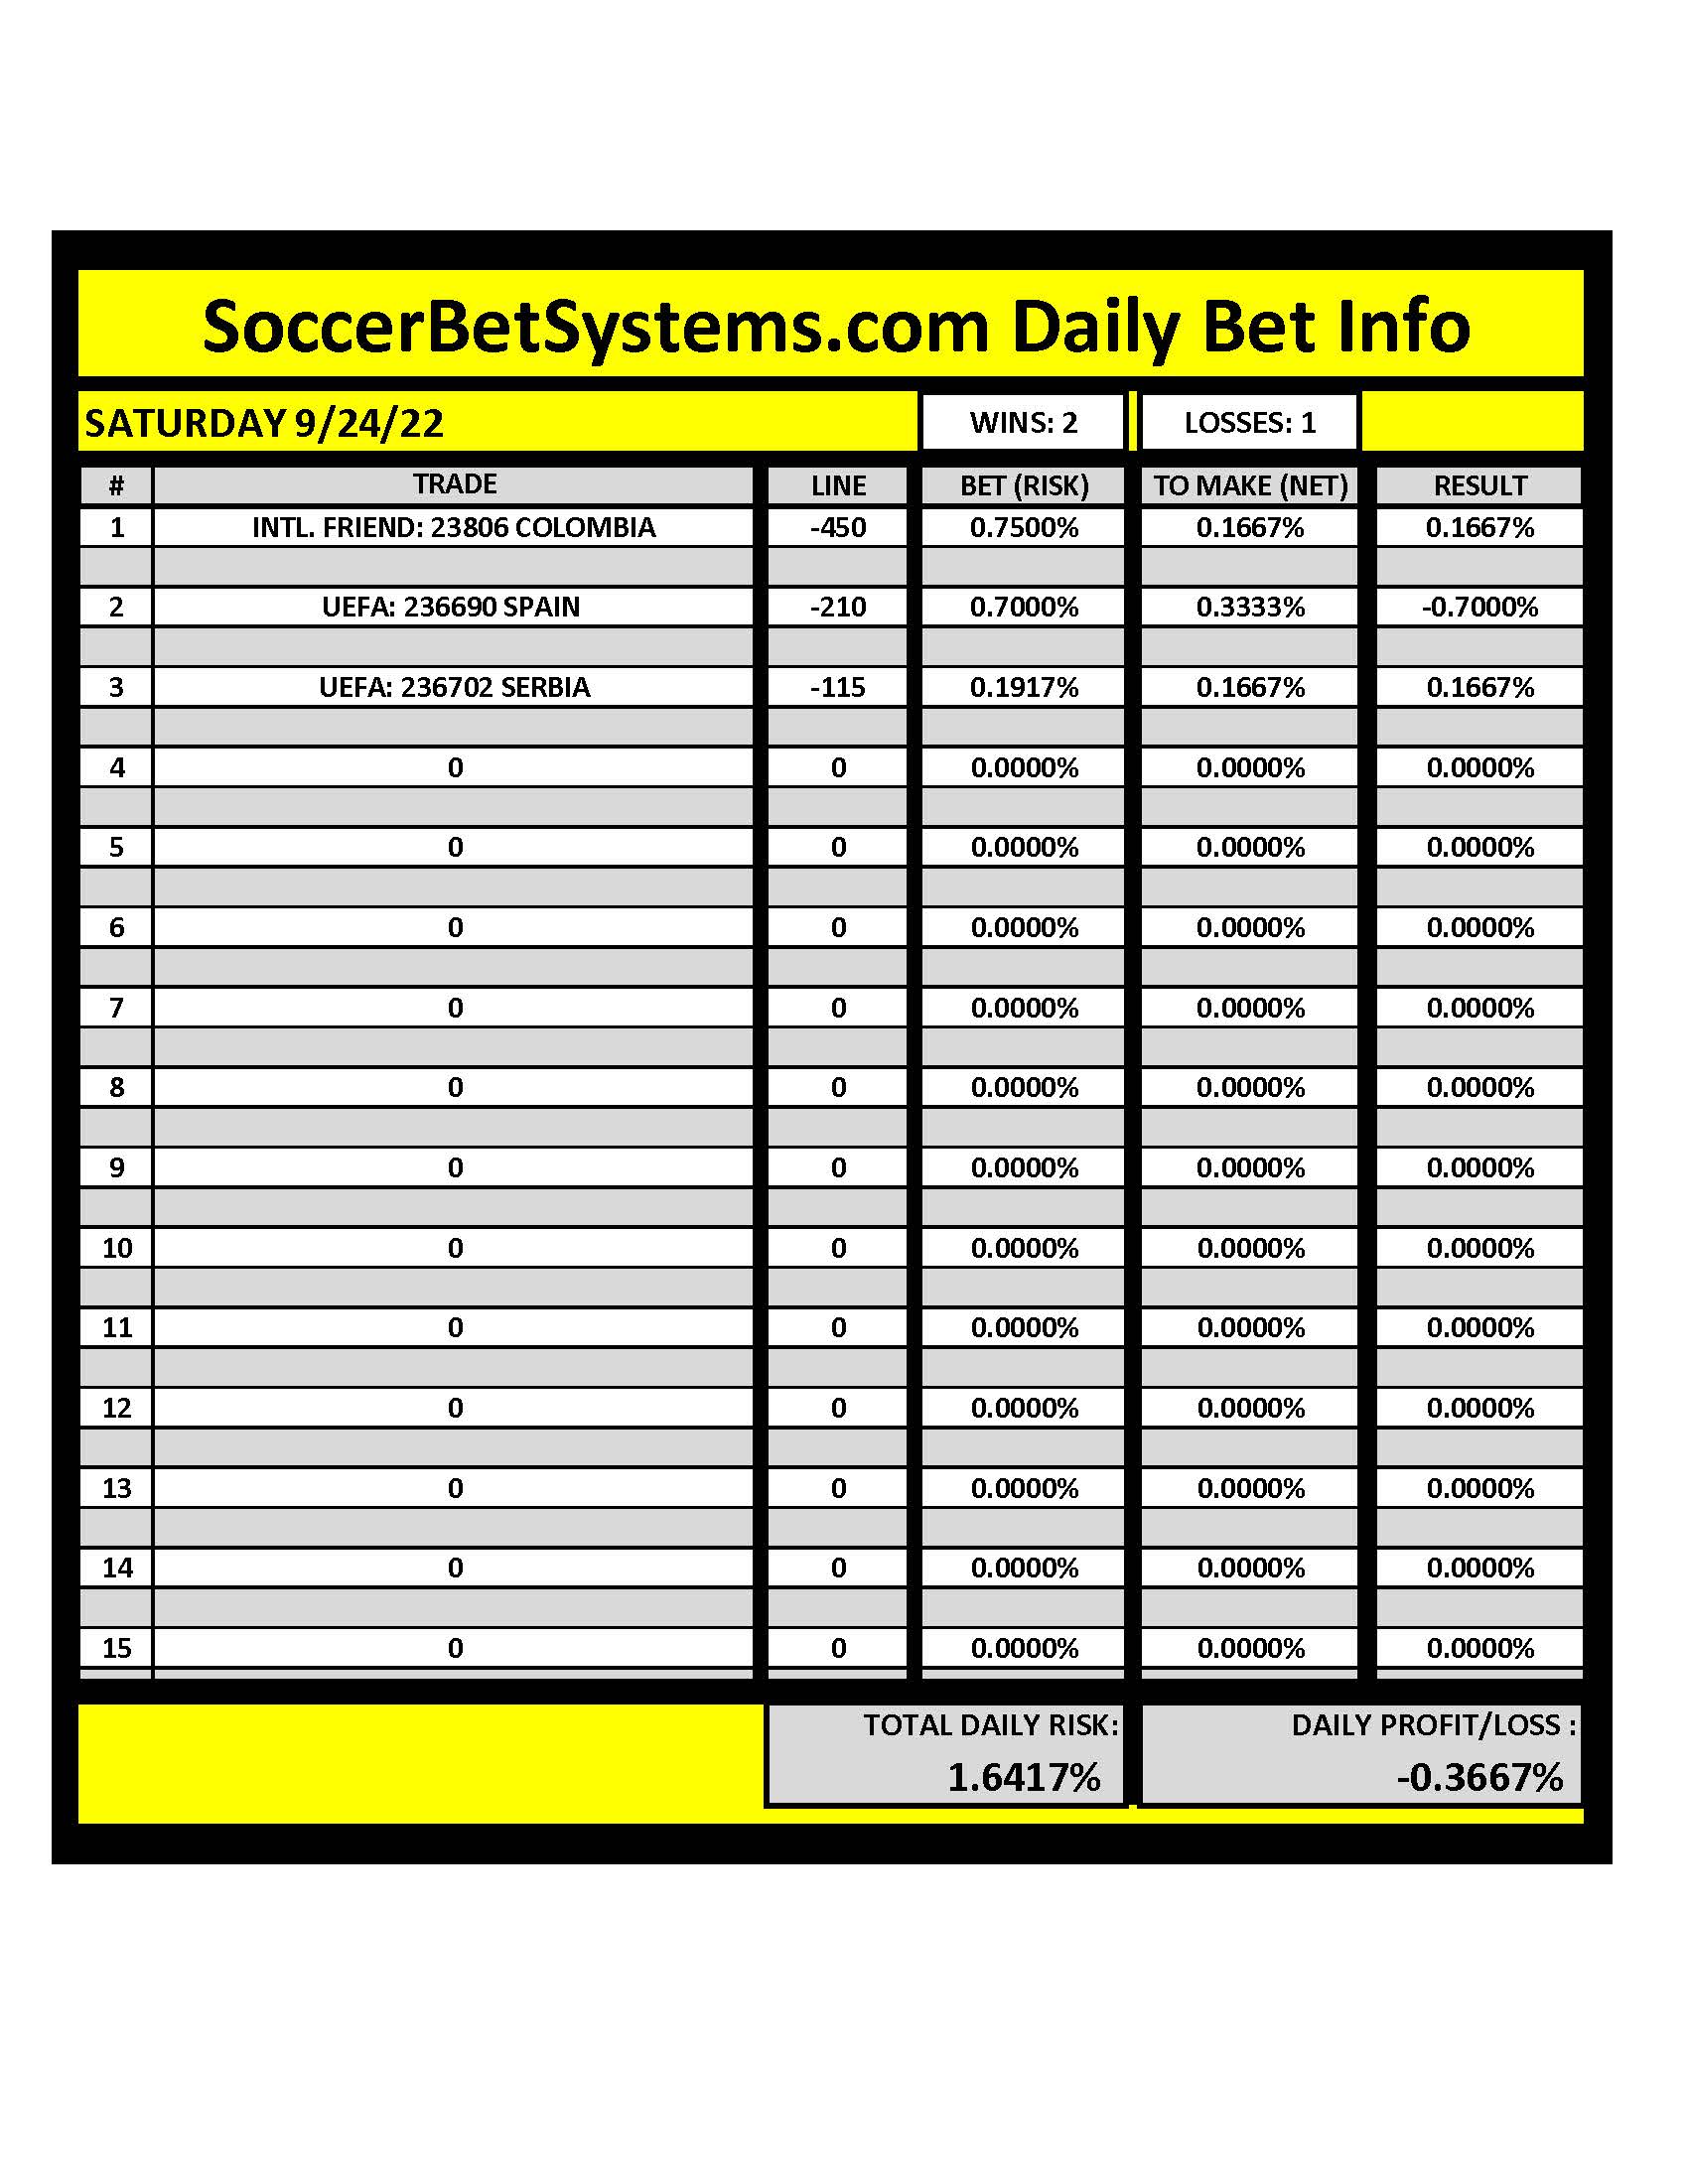 SoccerBetSystems.com 9/24/22 Daily Results